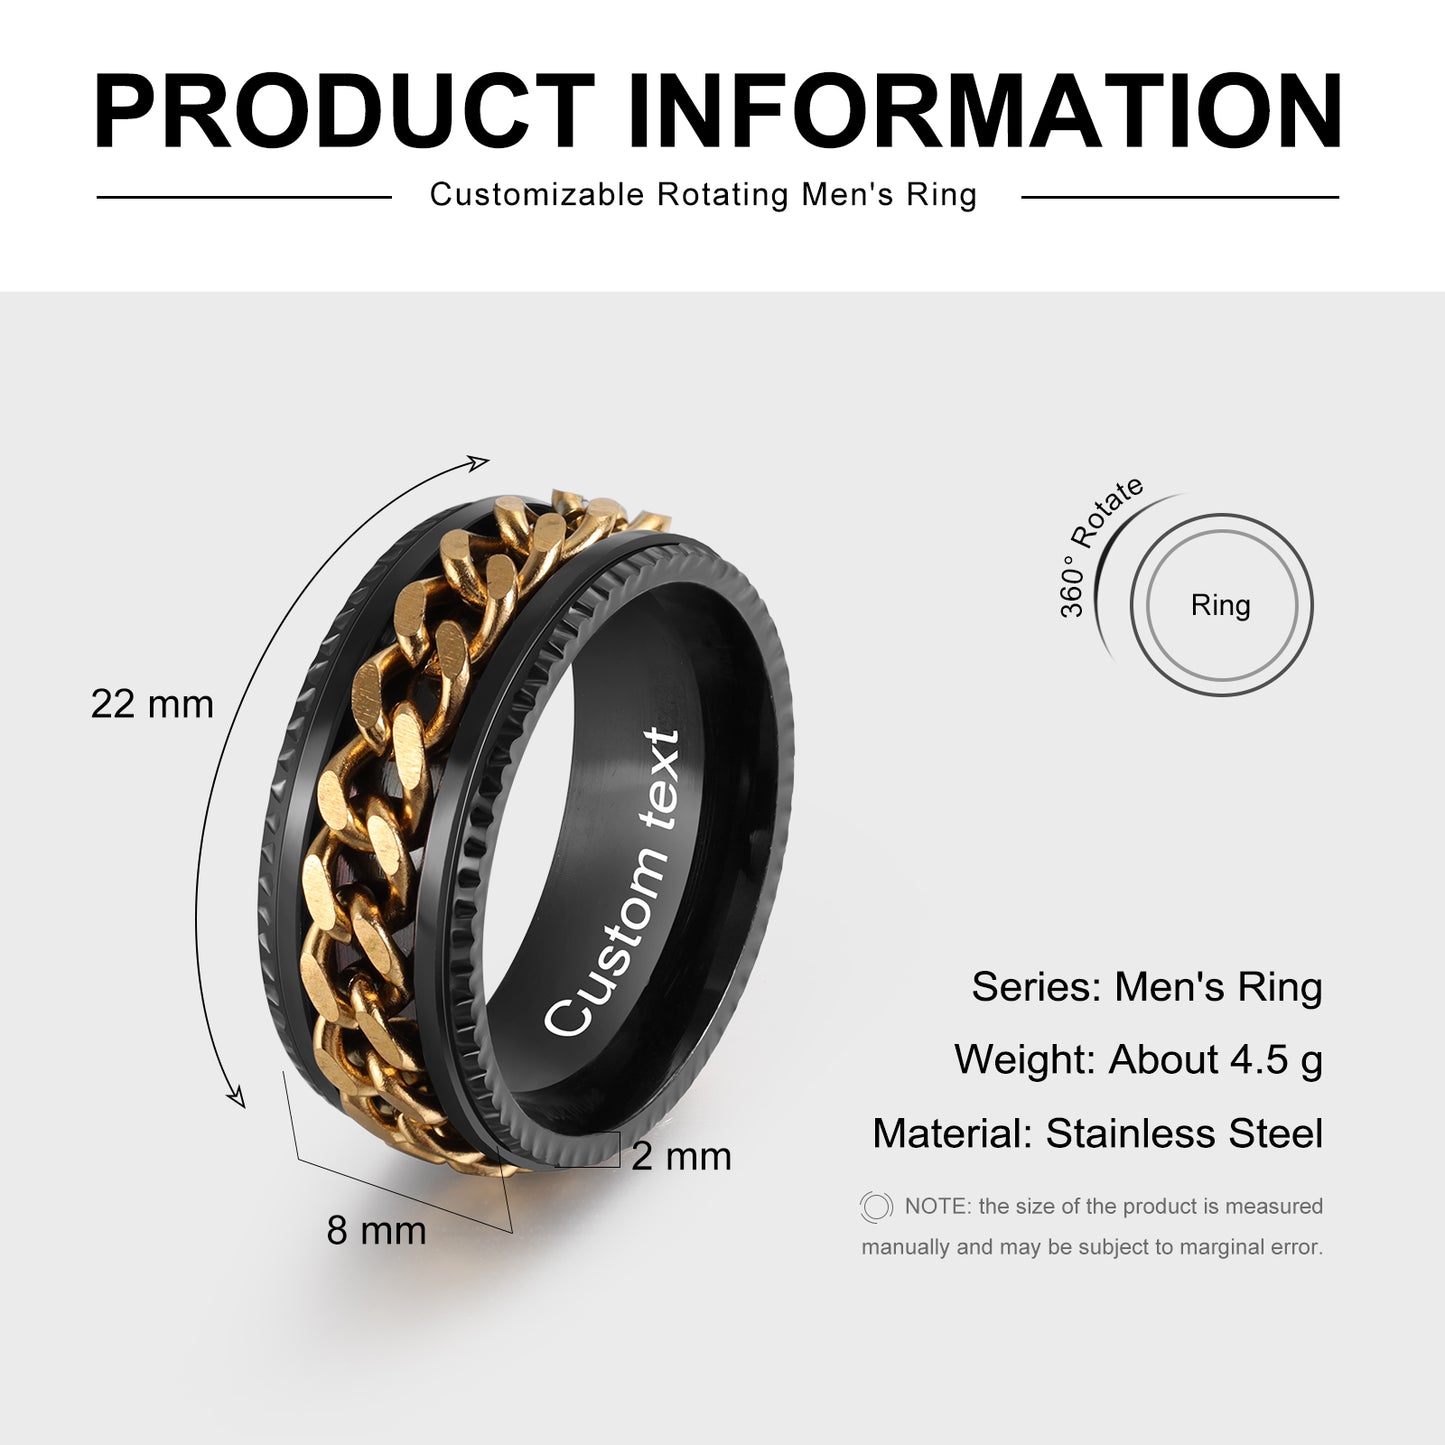 Custom Roratable Men's Ring - iYdr